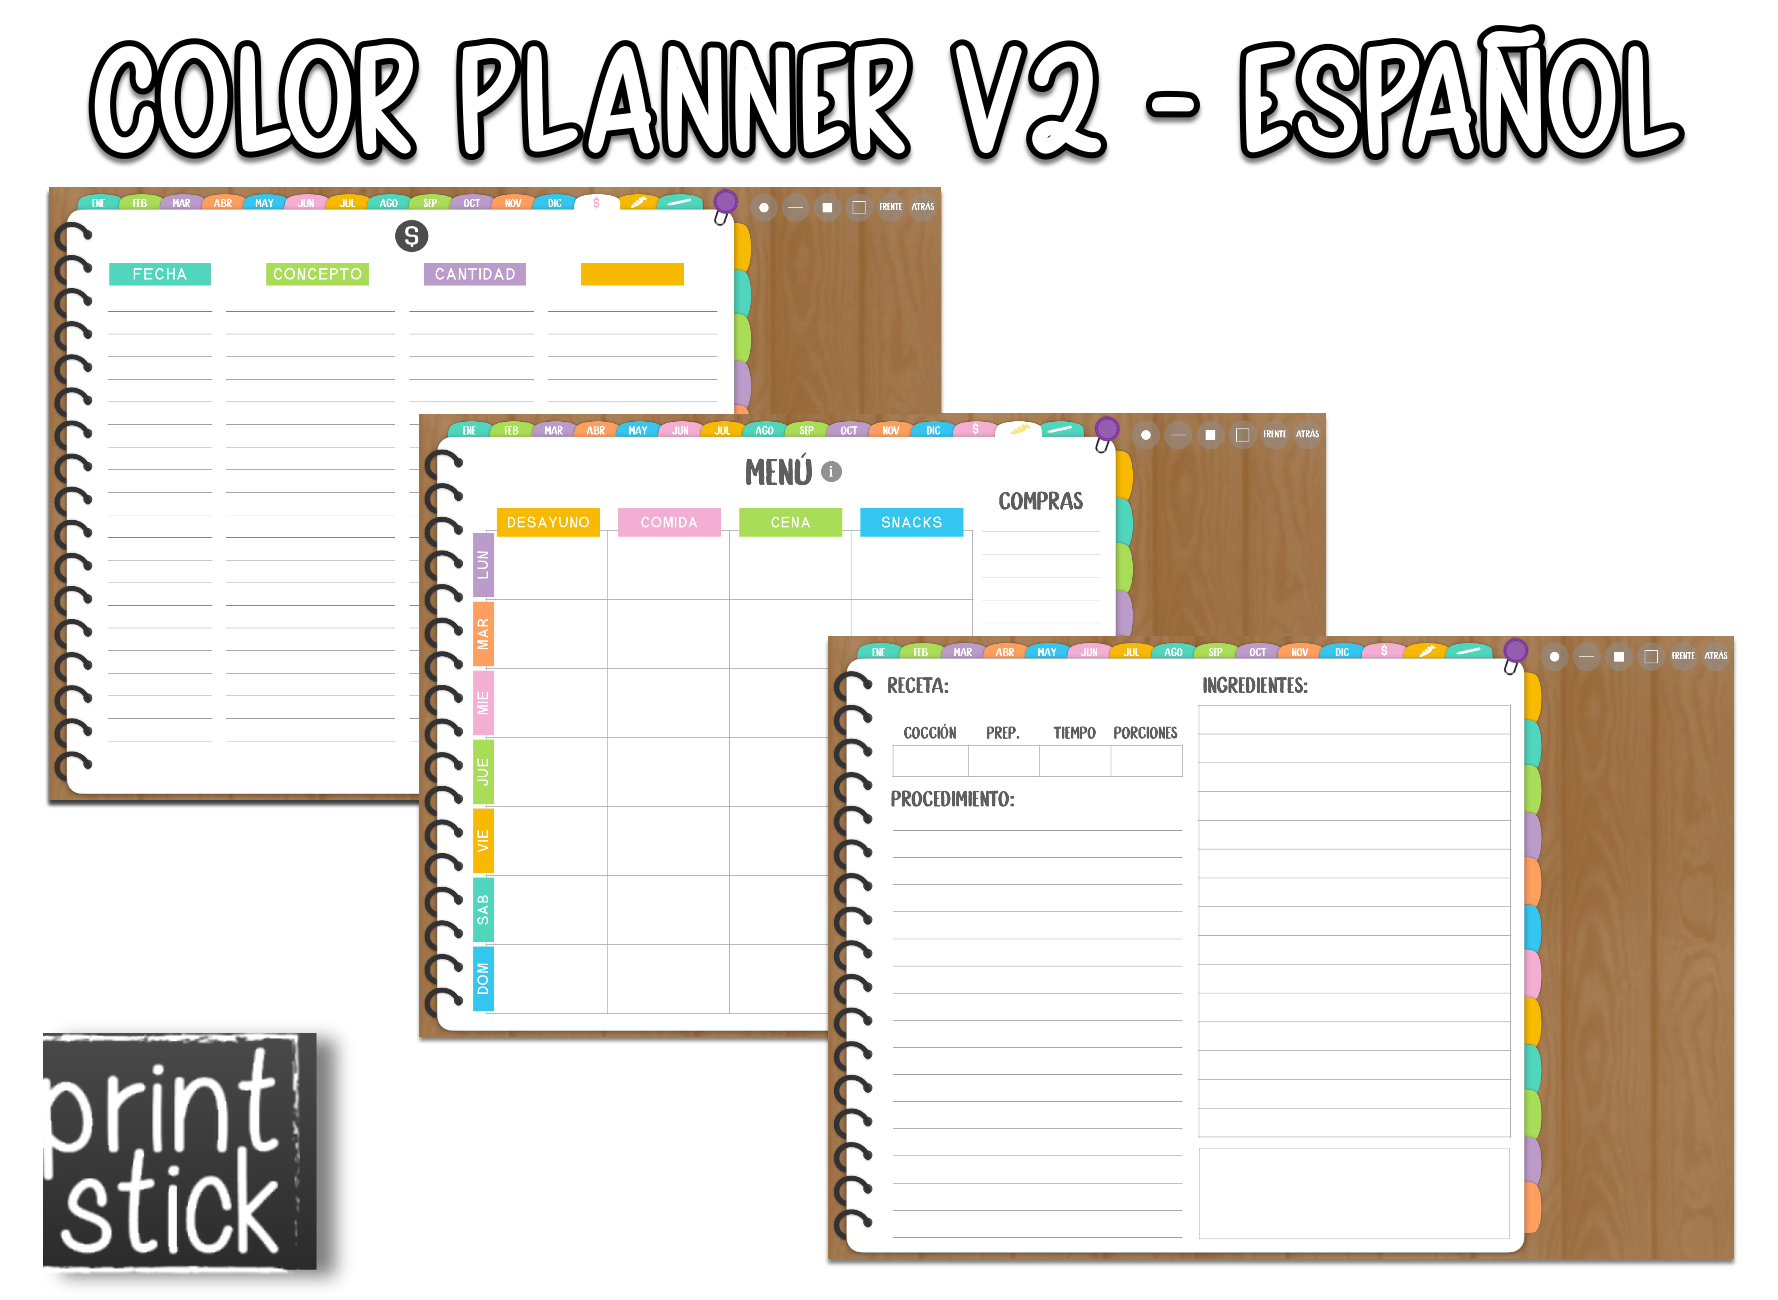 En Español: Agenda Digital Color Planner V2 - Print Stick